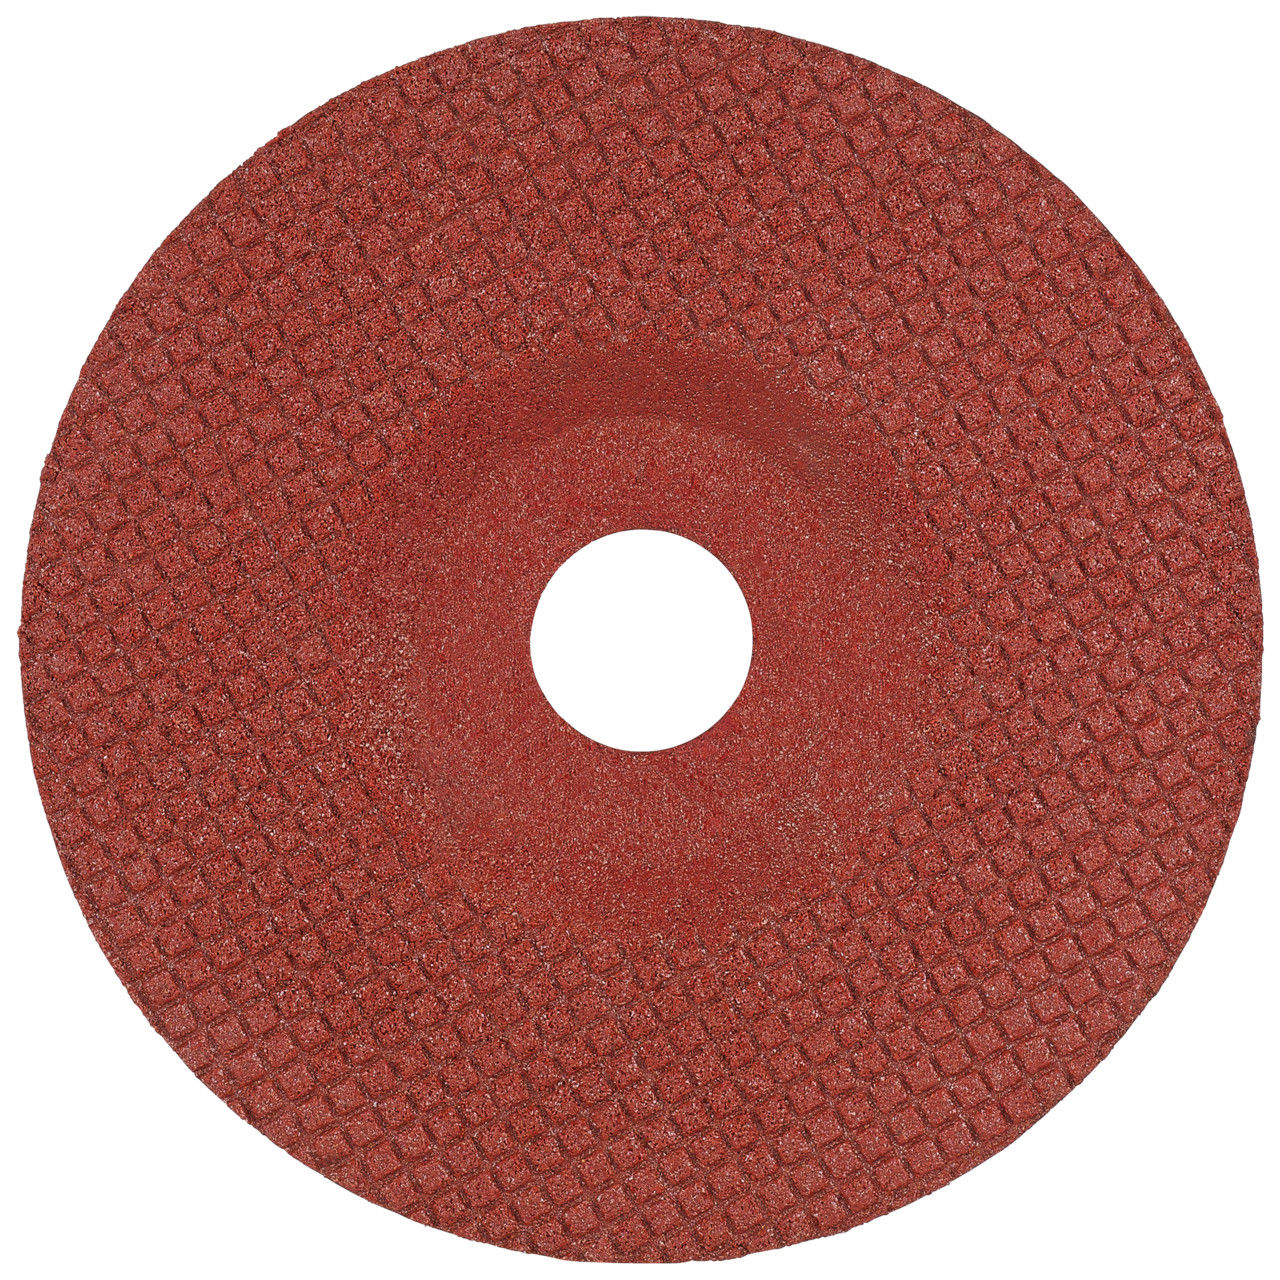 Disco de desbaste TYROLIT DxH 178x22,23 TOUCH para acero inoxidable y metales no férricos, forma: 29T - versión offset, Art. 236320